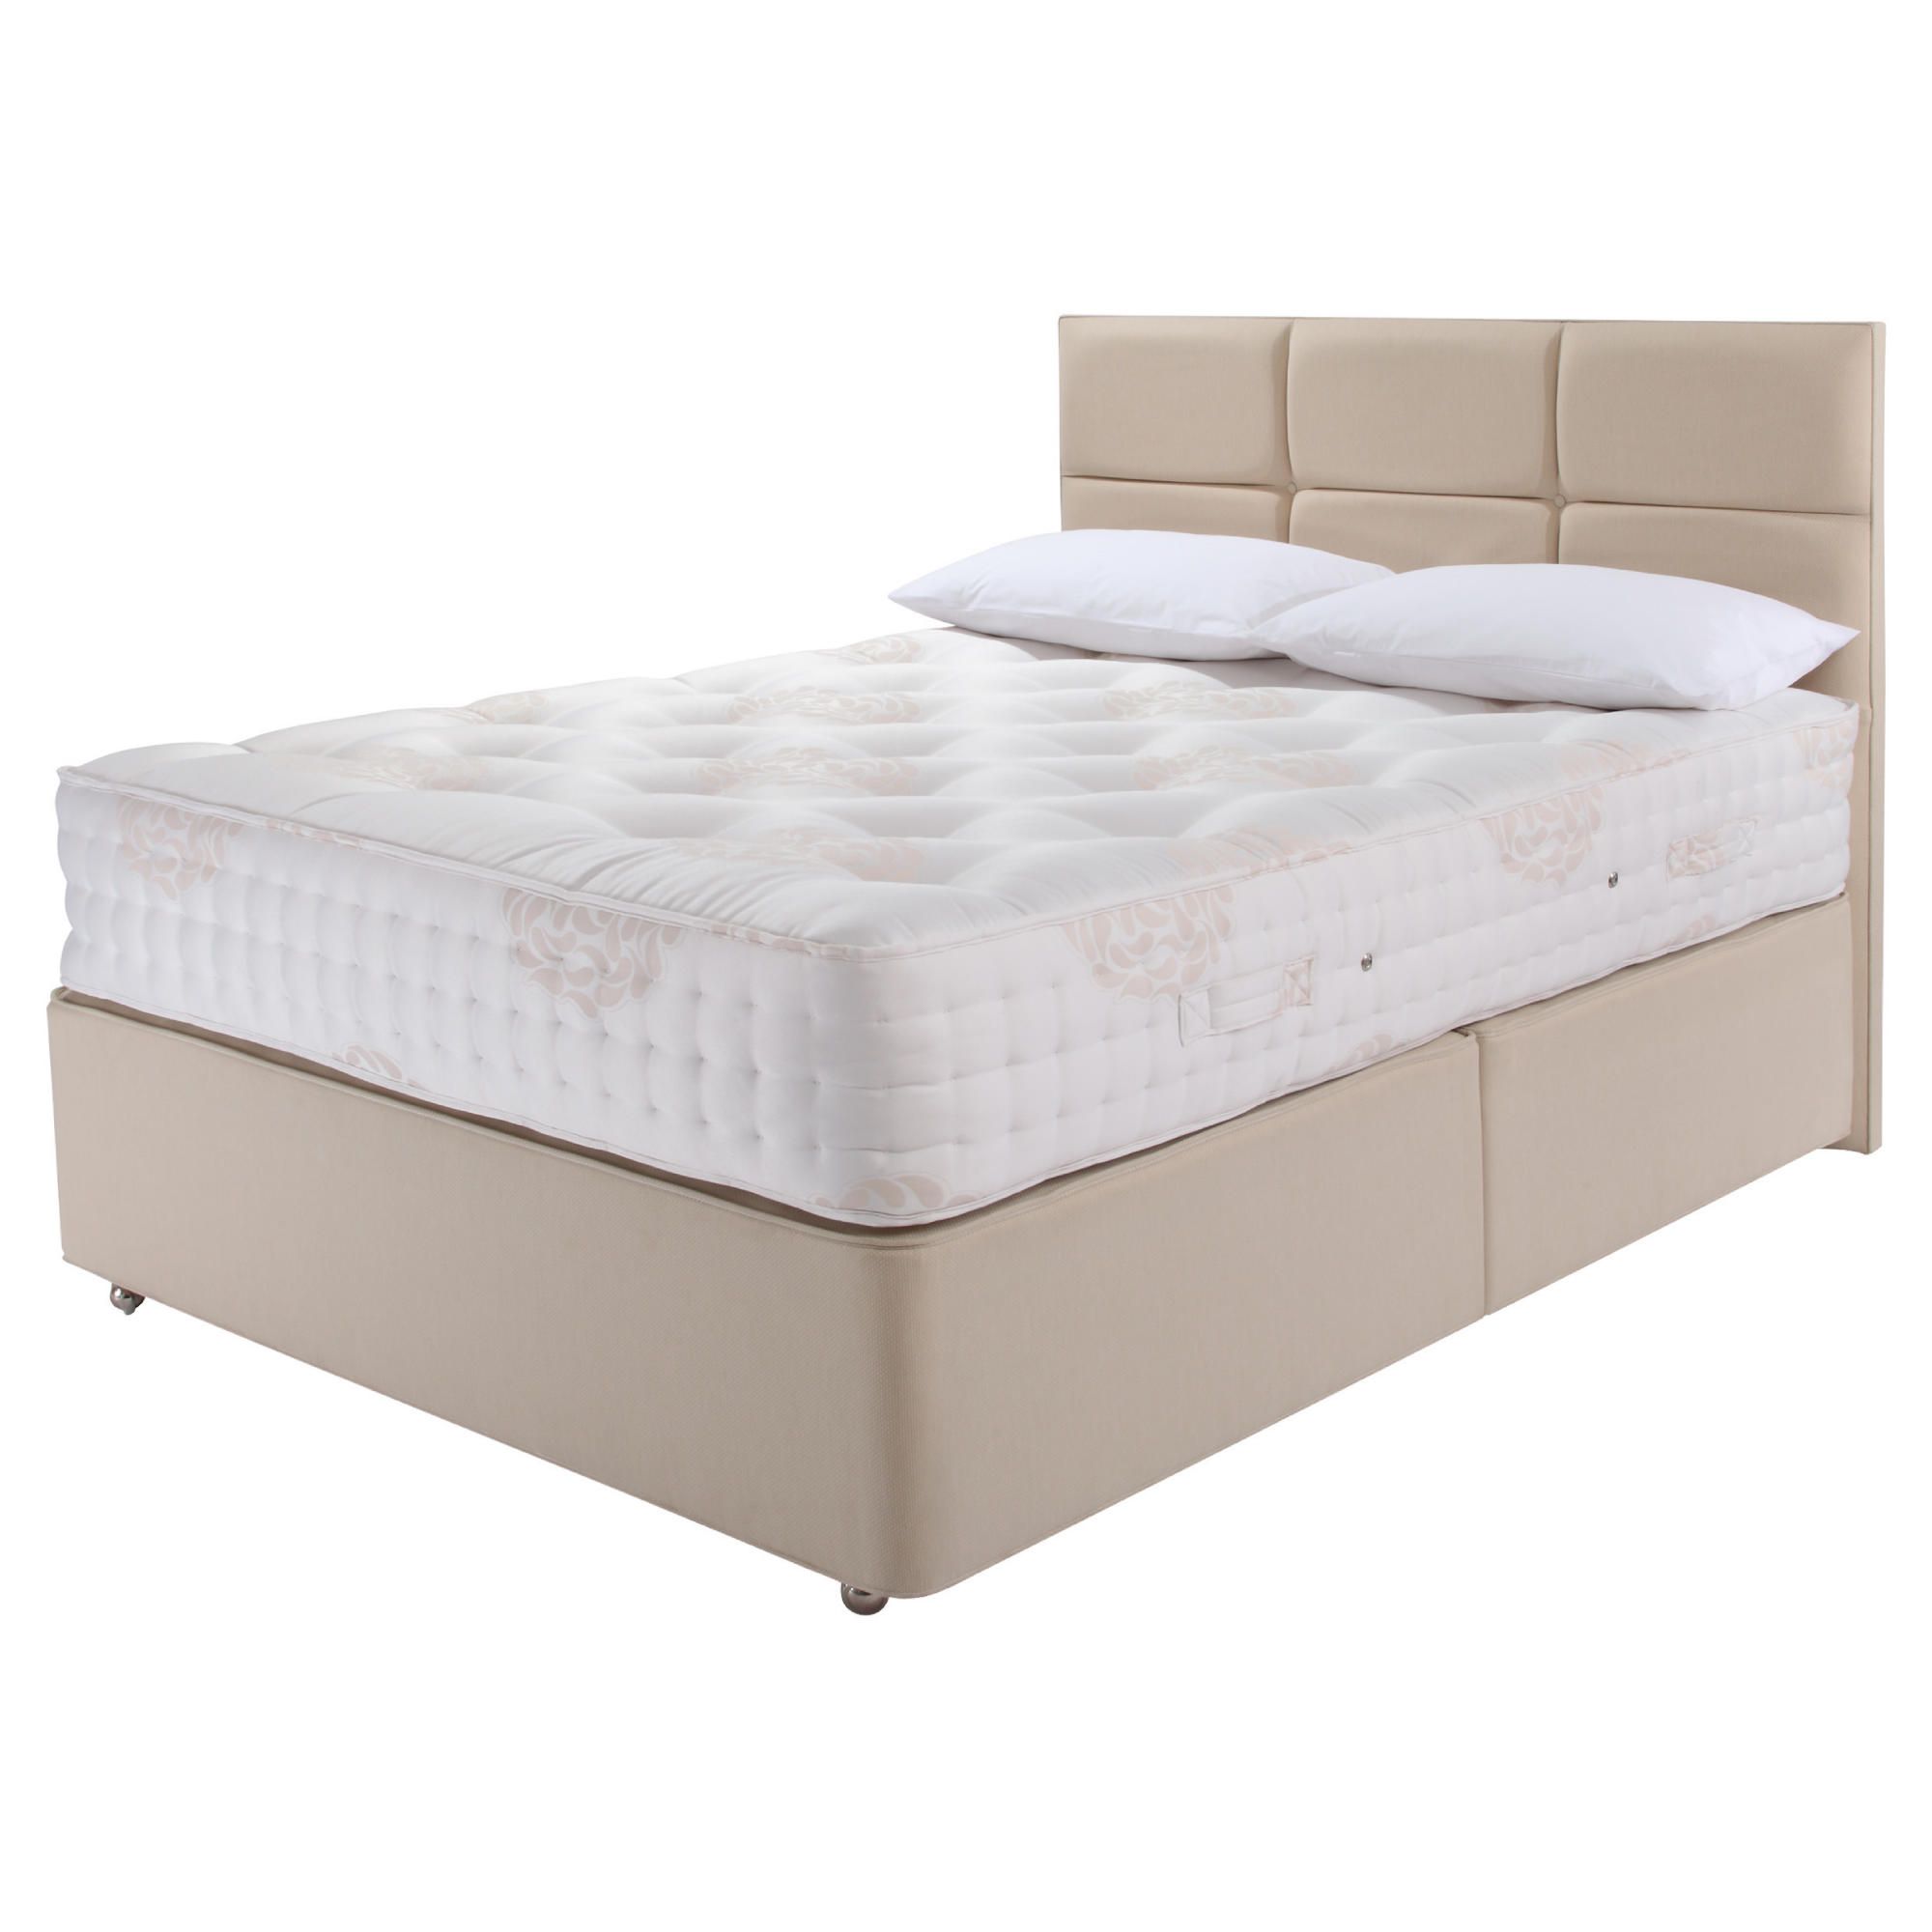 Relyon Luxury 1500 Non Storage Divan Bed Superking at Tesco Direct